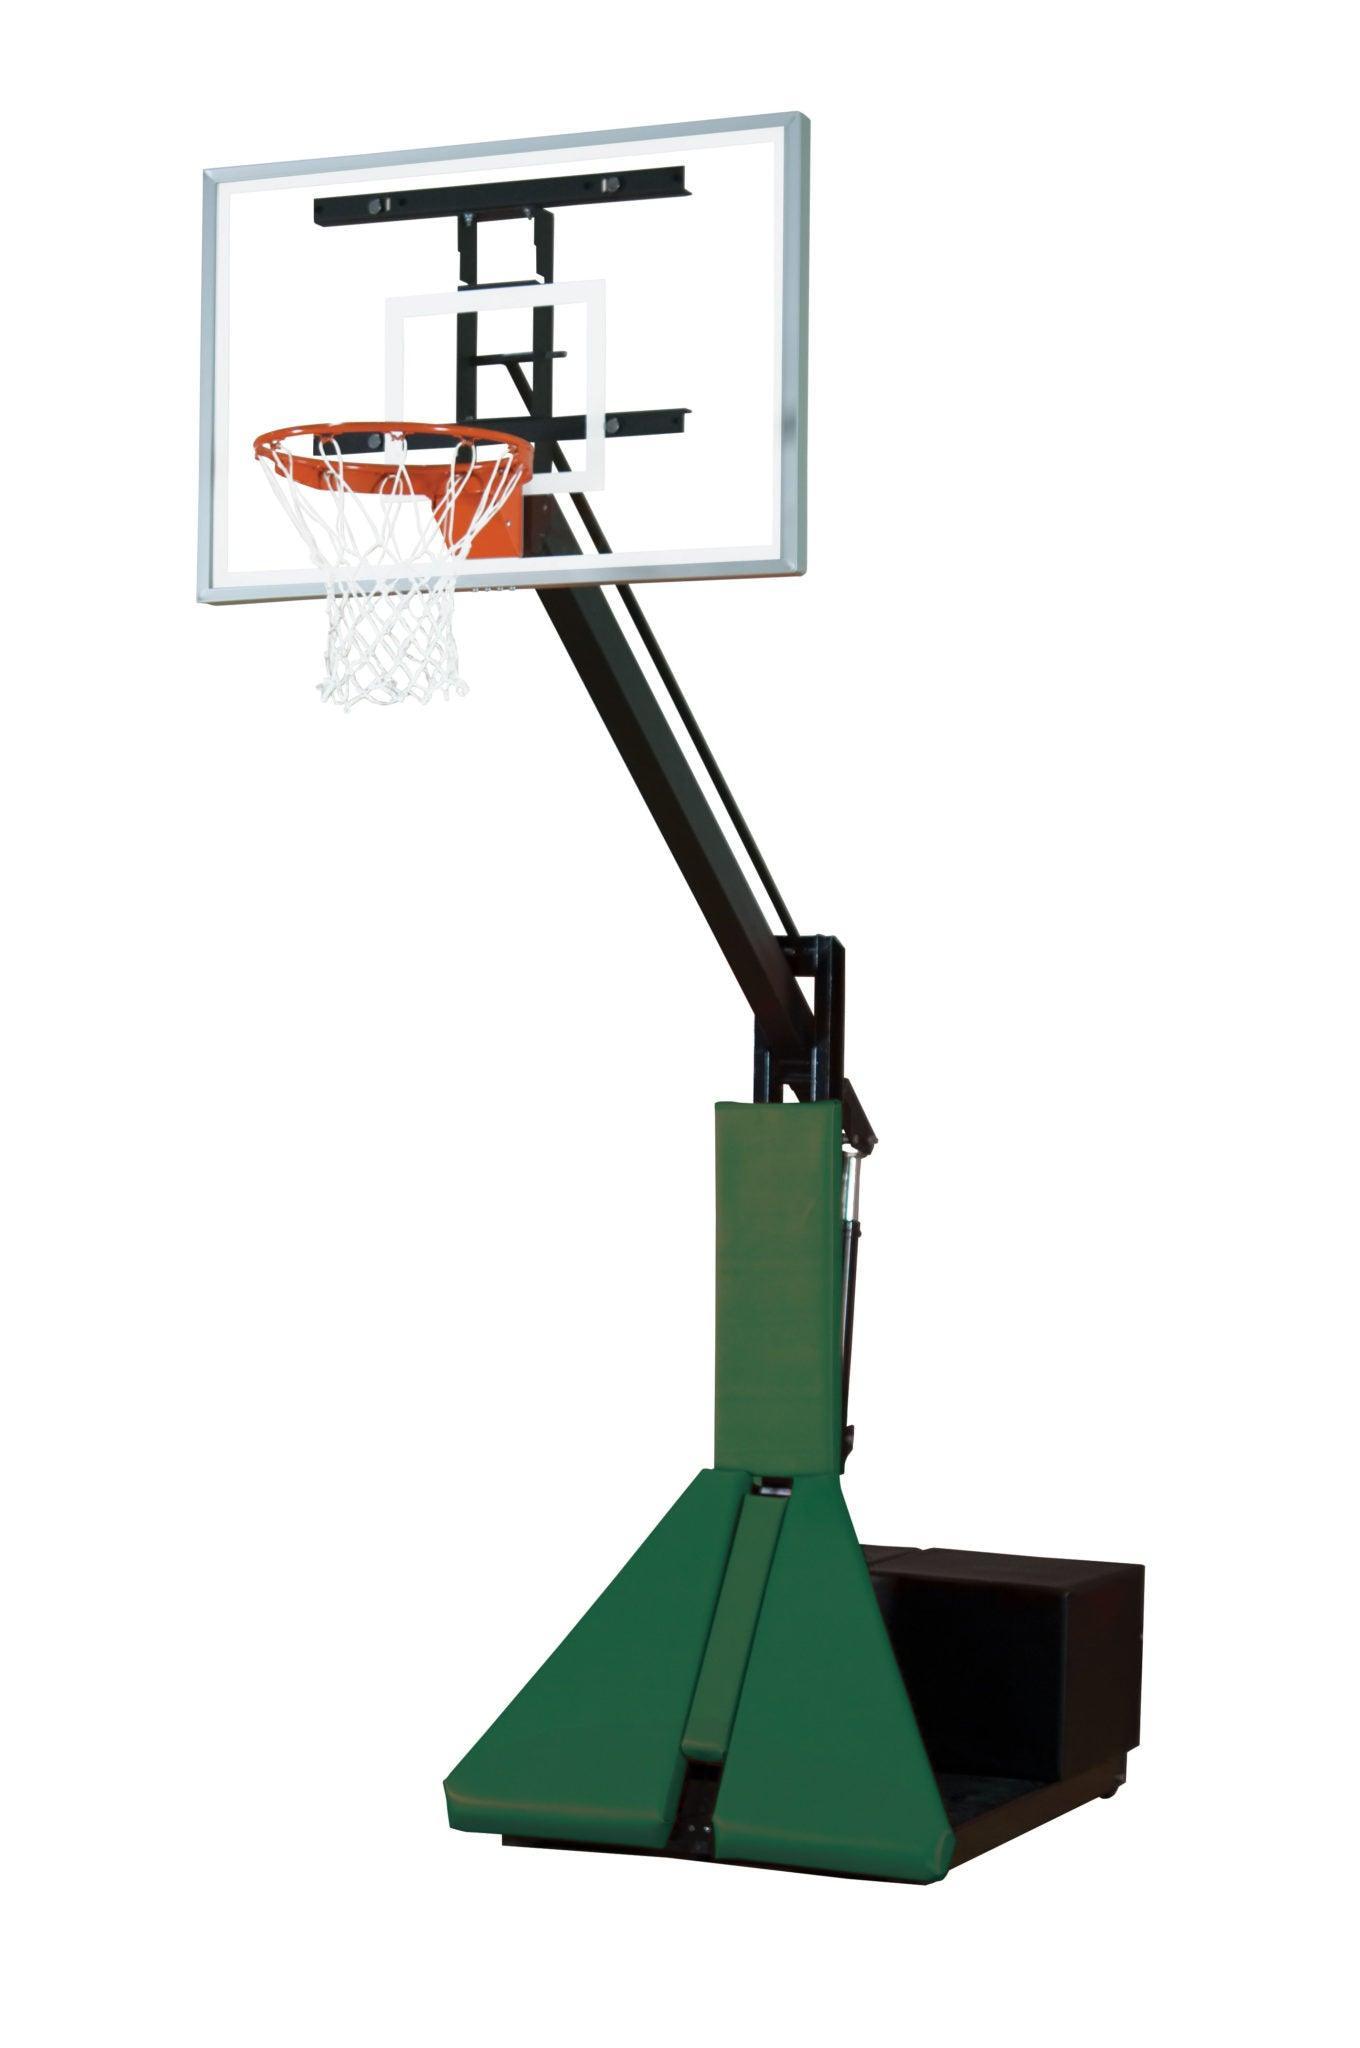 Acrylic Max Portable Adjustable Basketball System--4 Stock Padding Colors